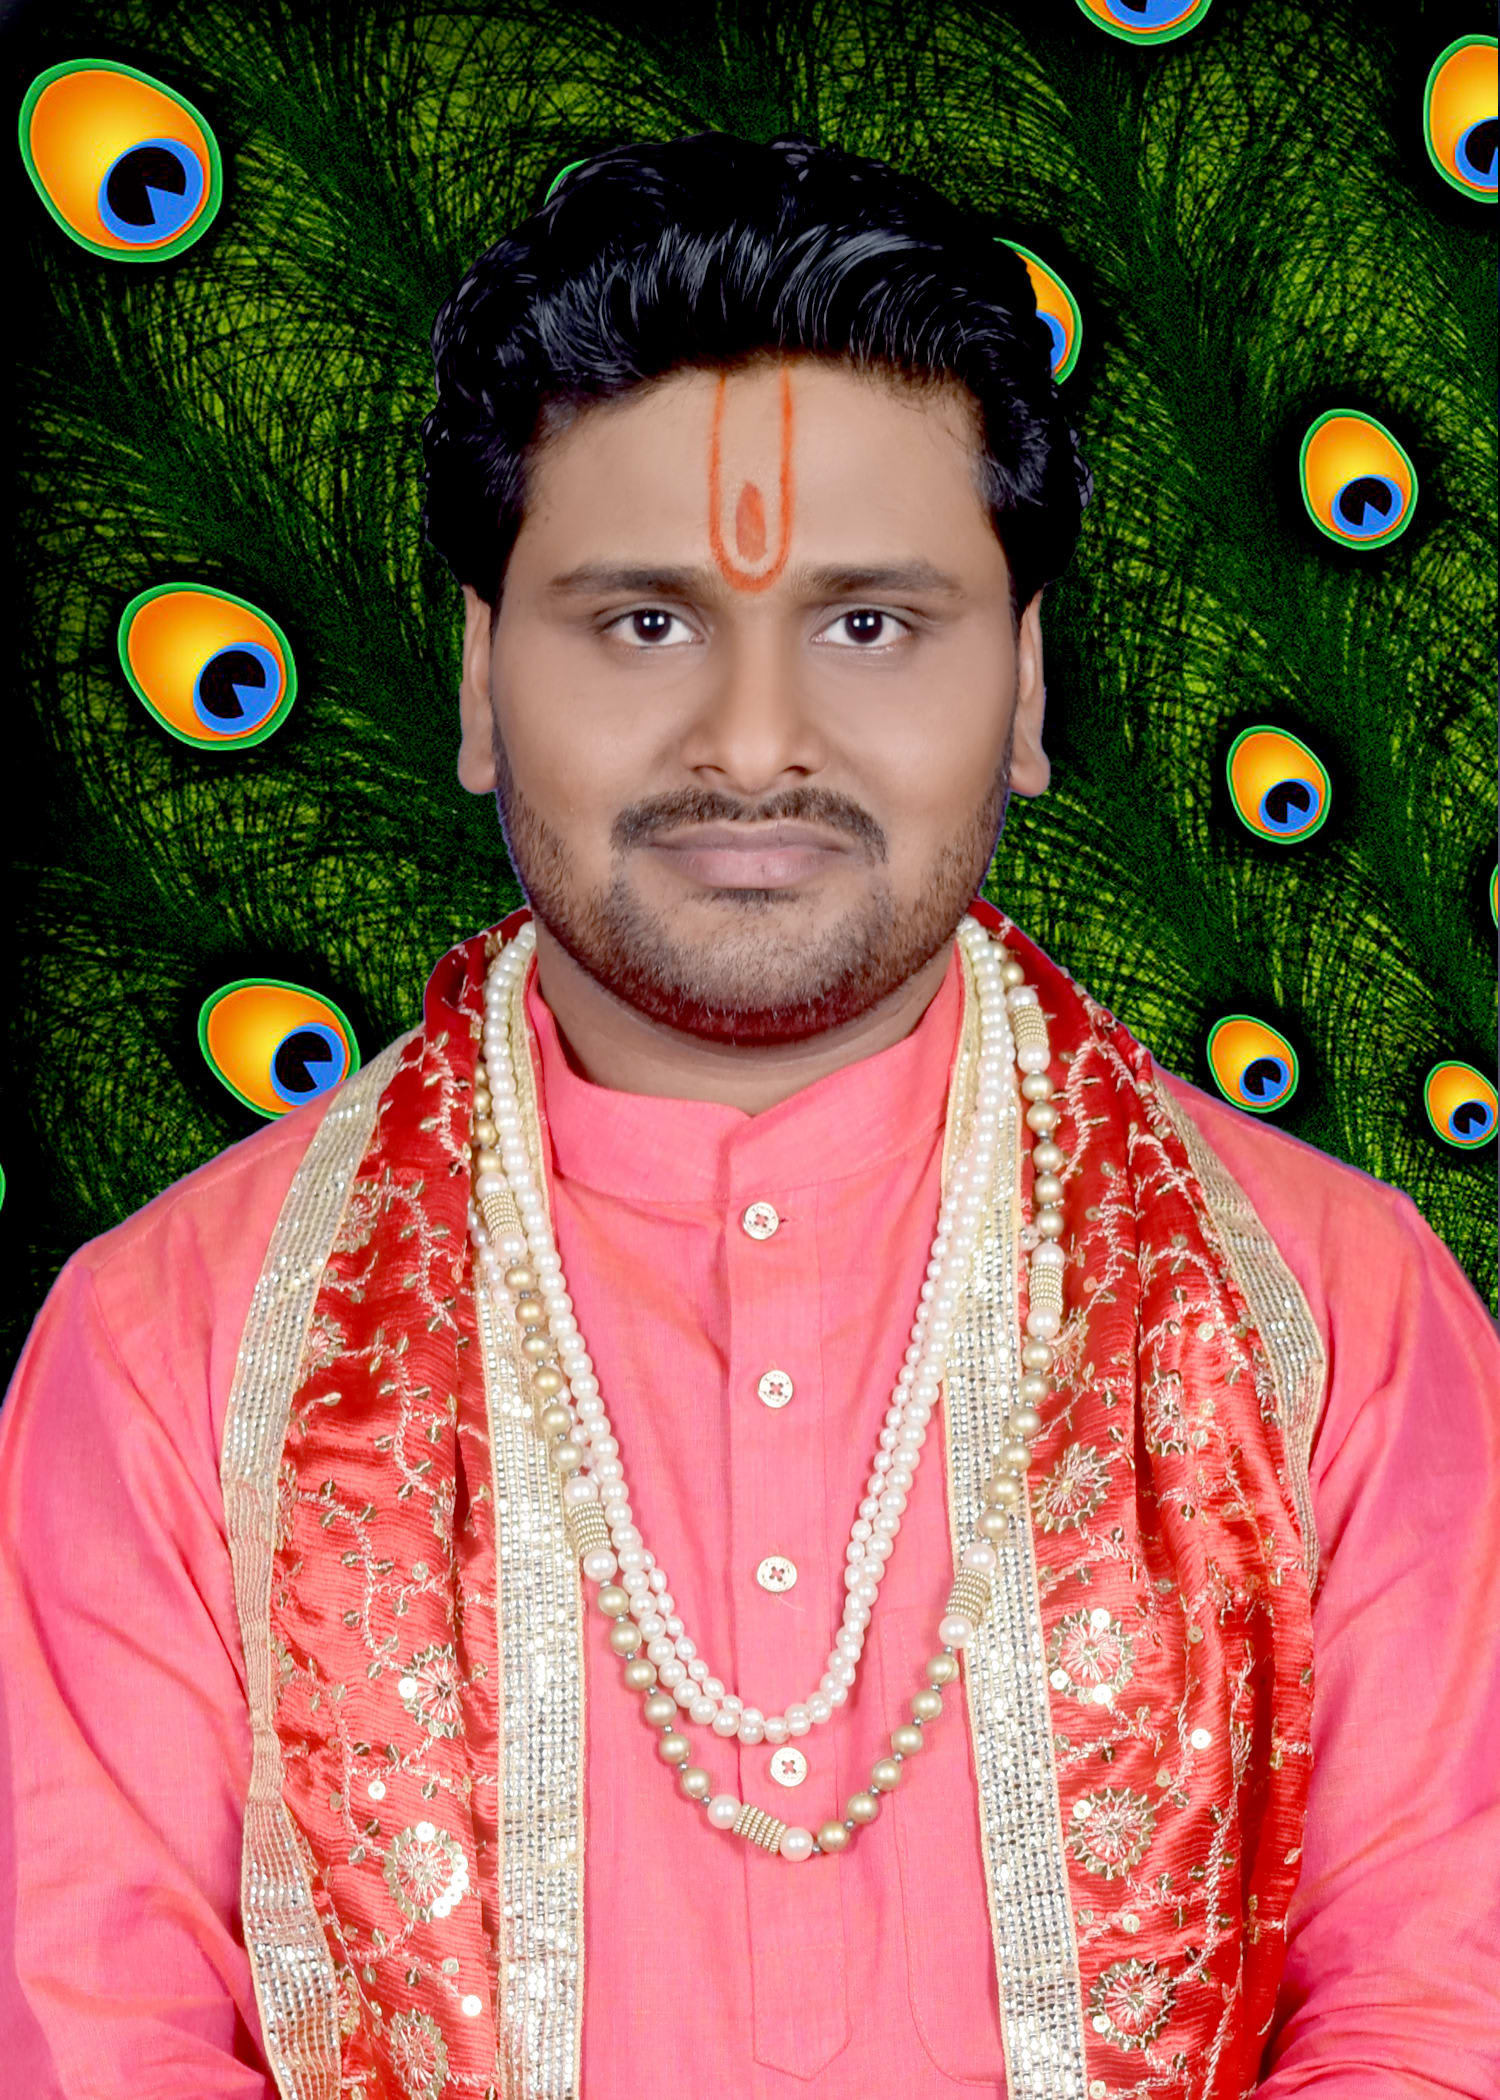 Shri Jyotish Smadhan Karyalaya